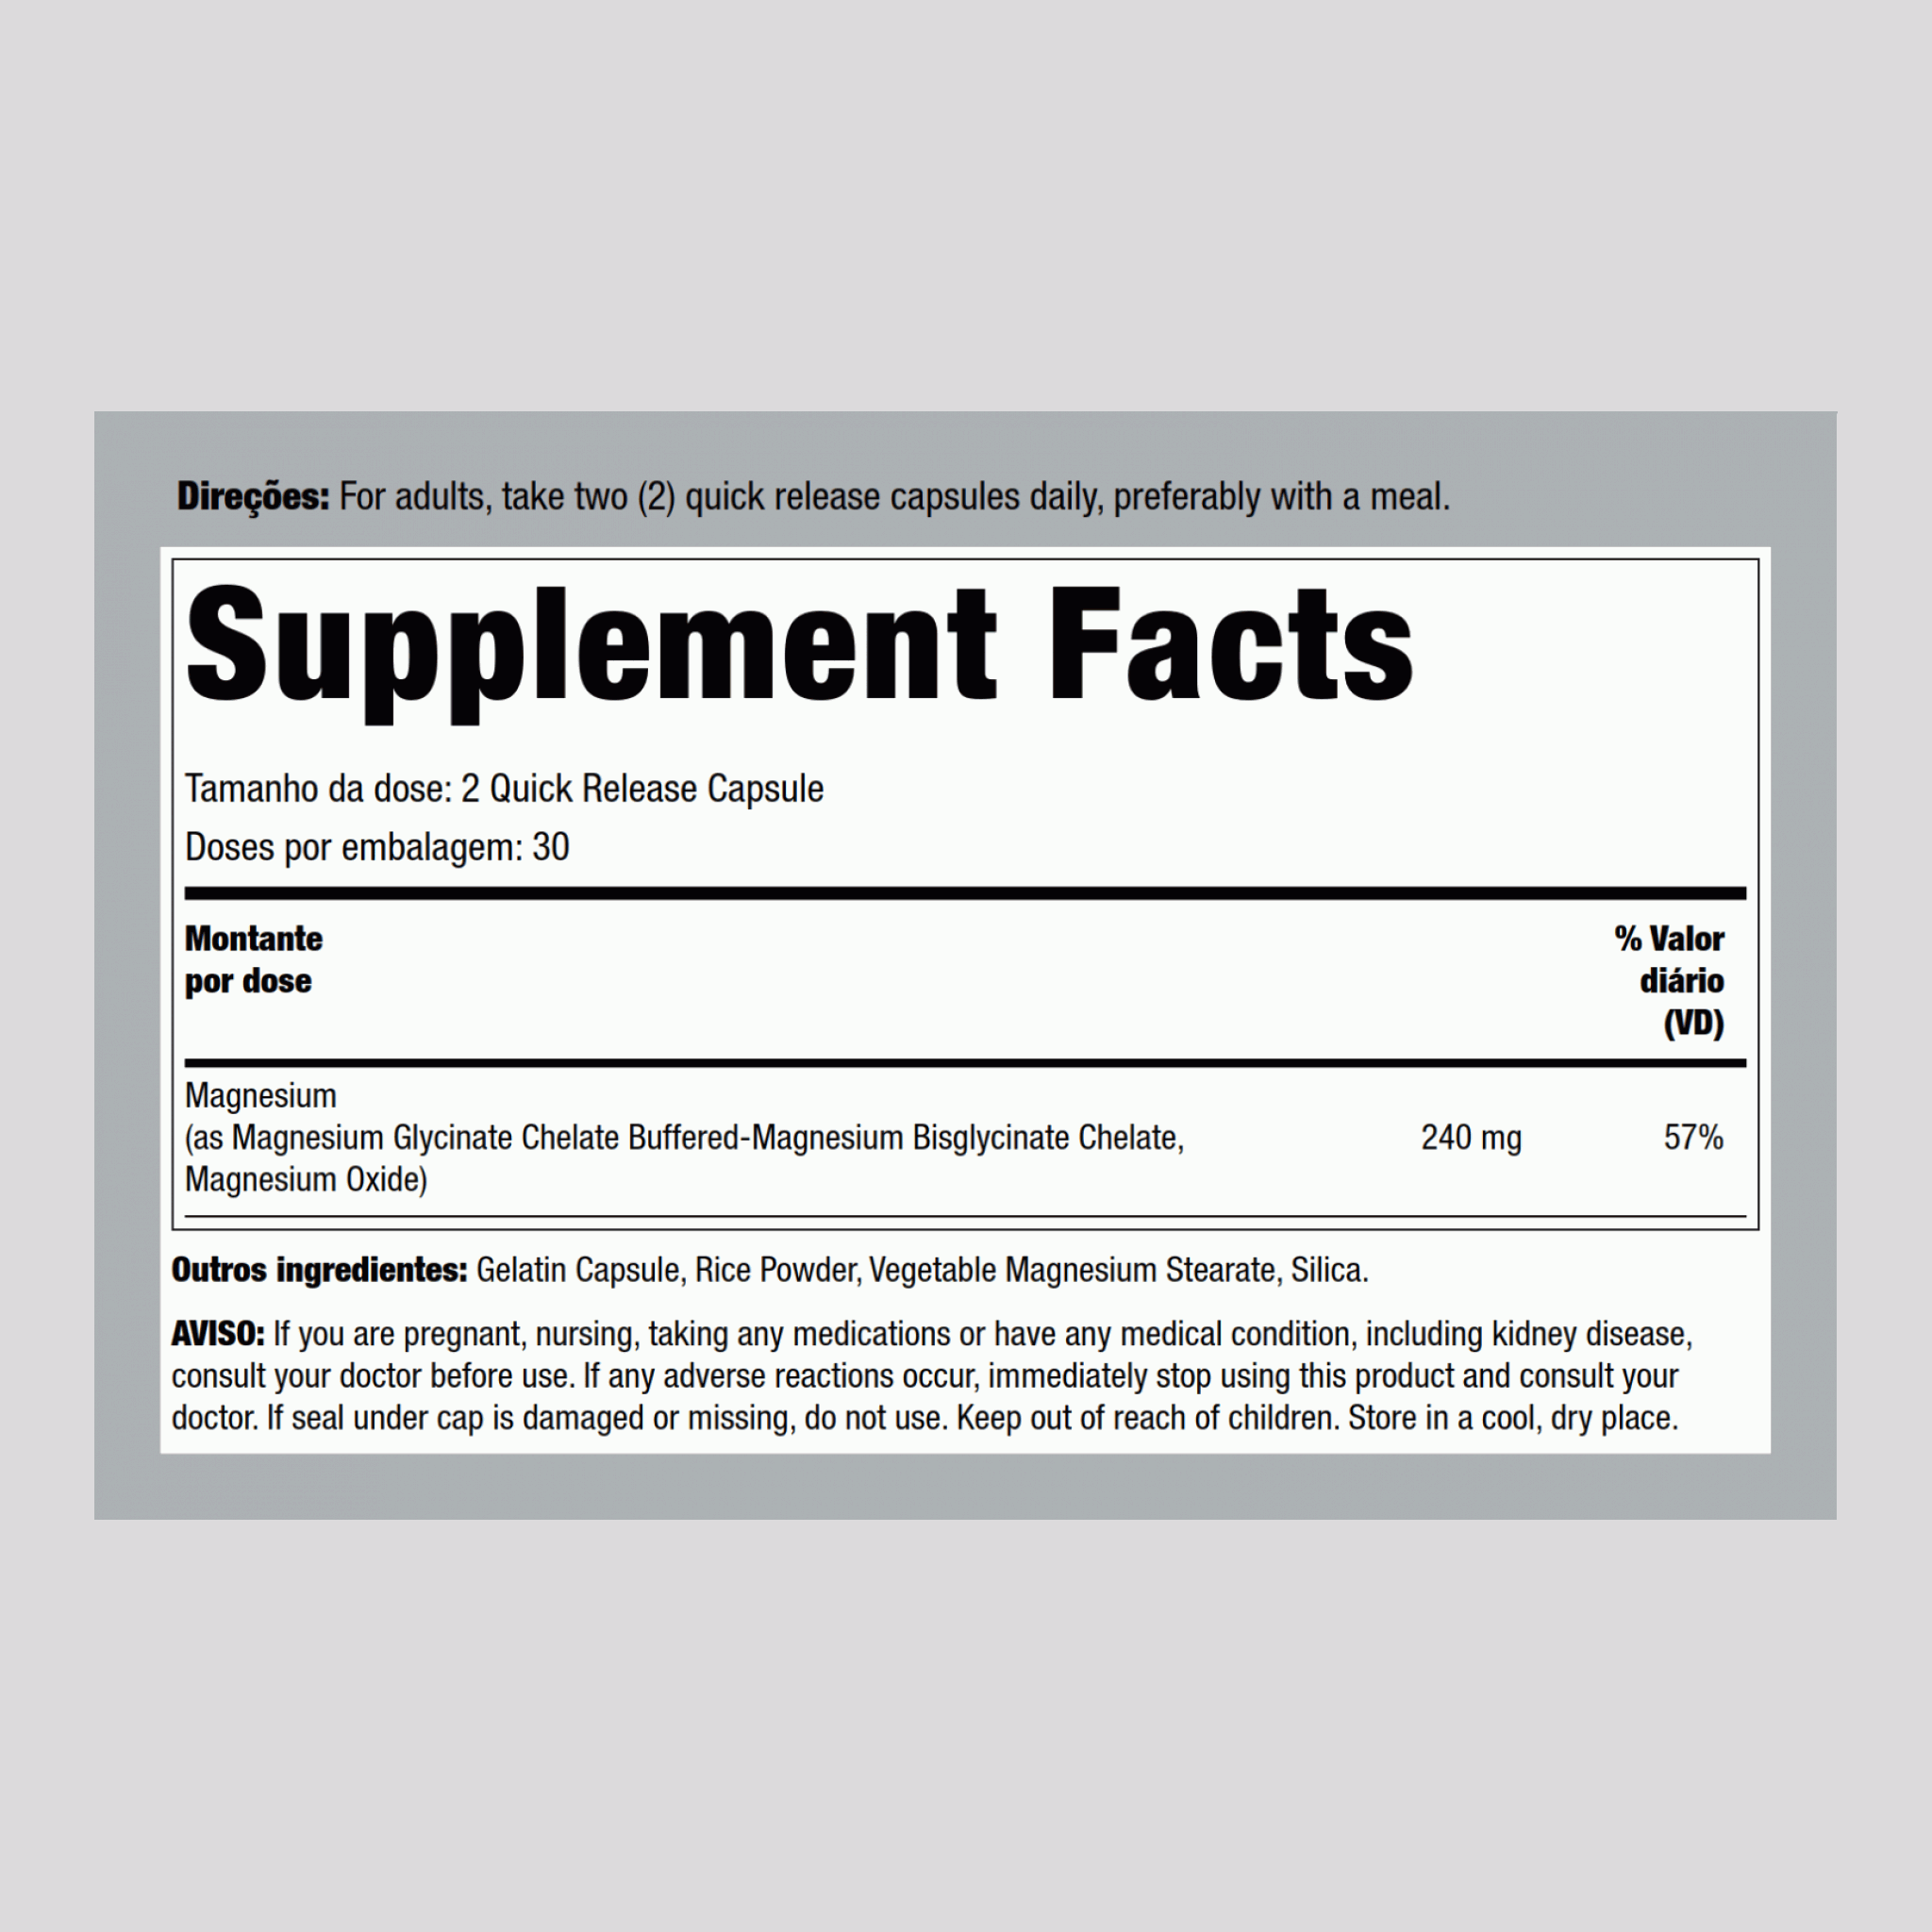 Chelated Magnesium, 240 mg (per serving), 60 Quick Release Capsules